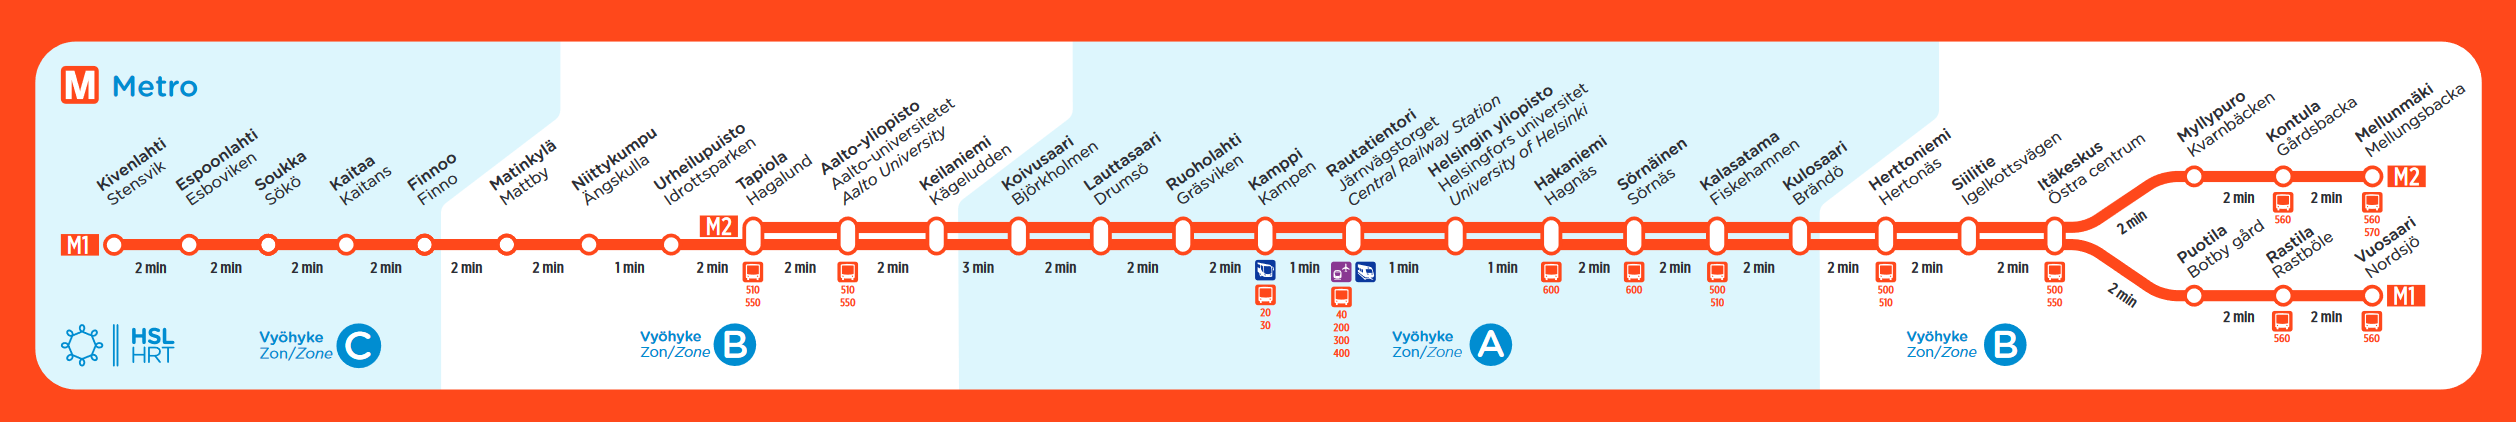 metro kartta helsinki espoo Helsingin Metrokartta Lomalista Fi metro kartta helsinki espoo